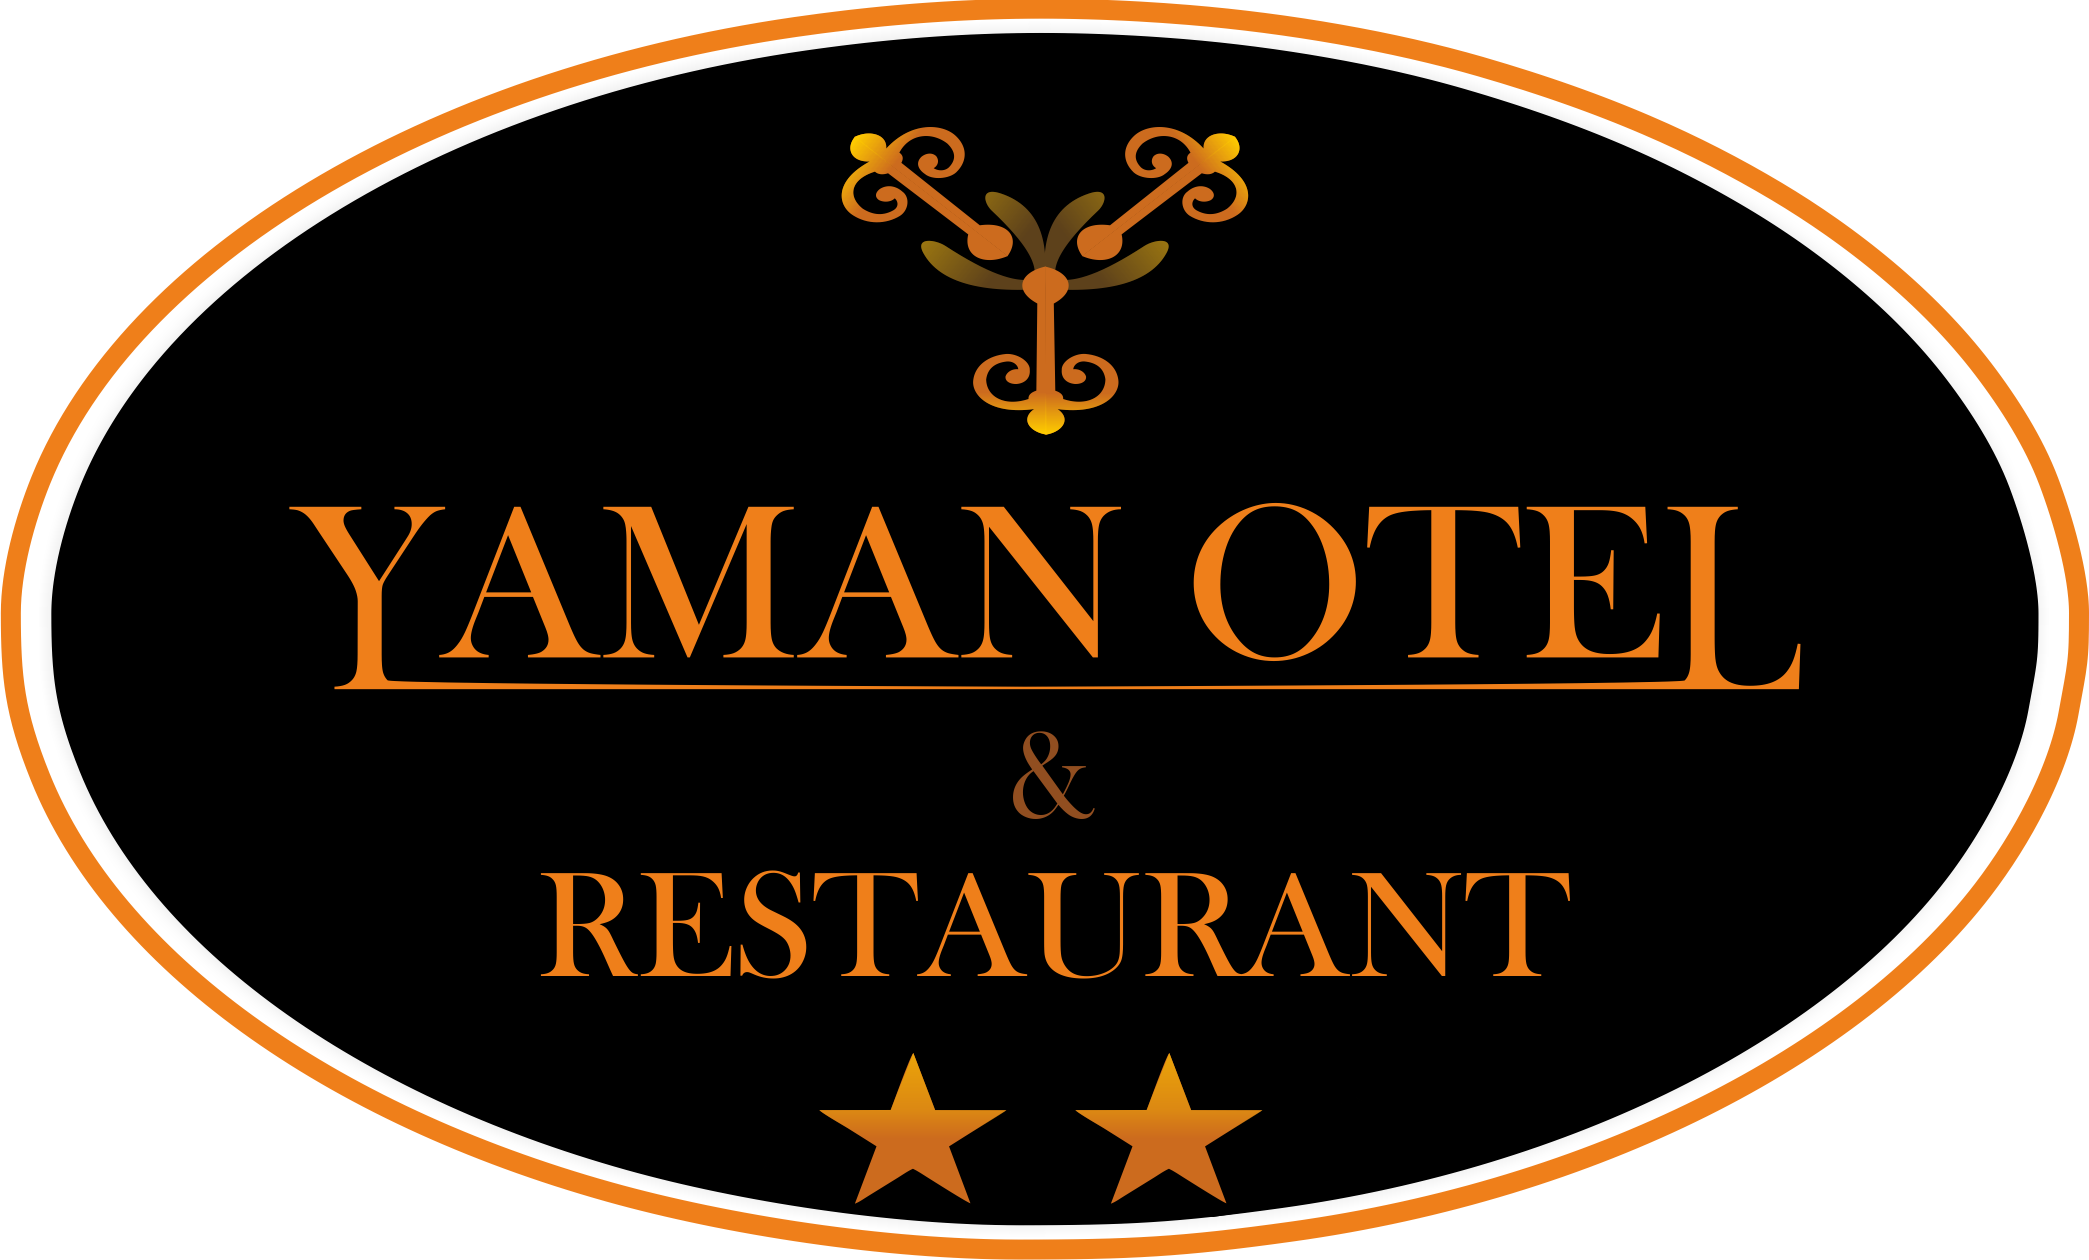 Yaman Otel Restaurant